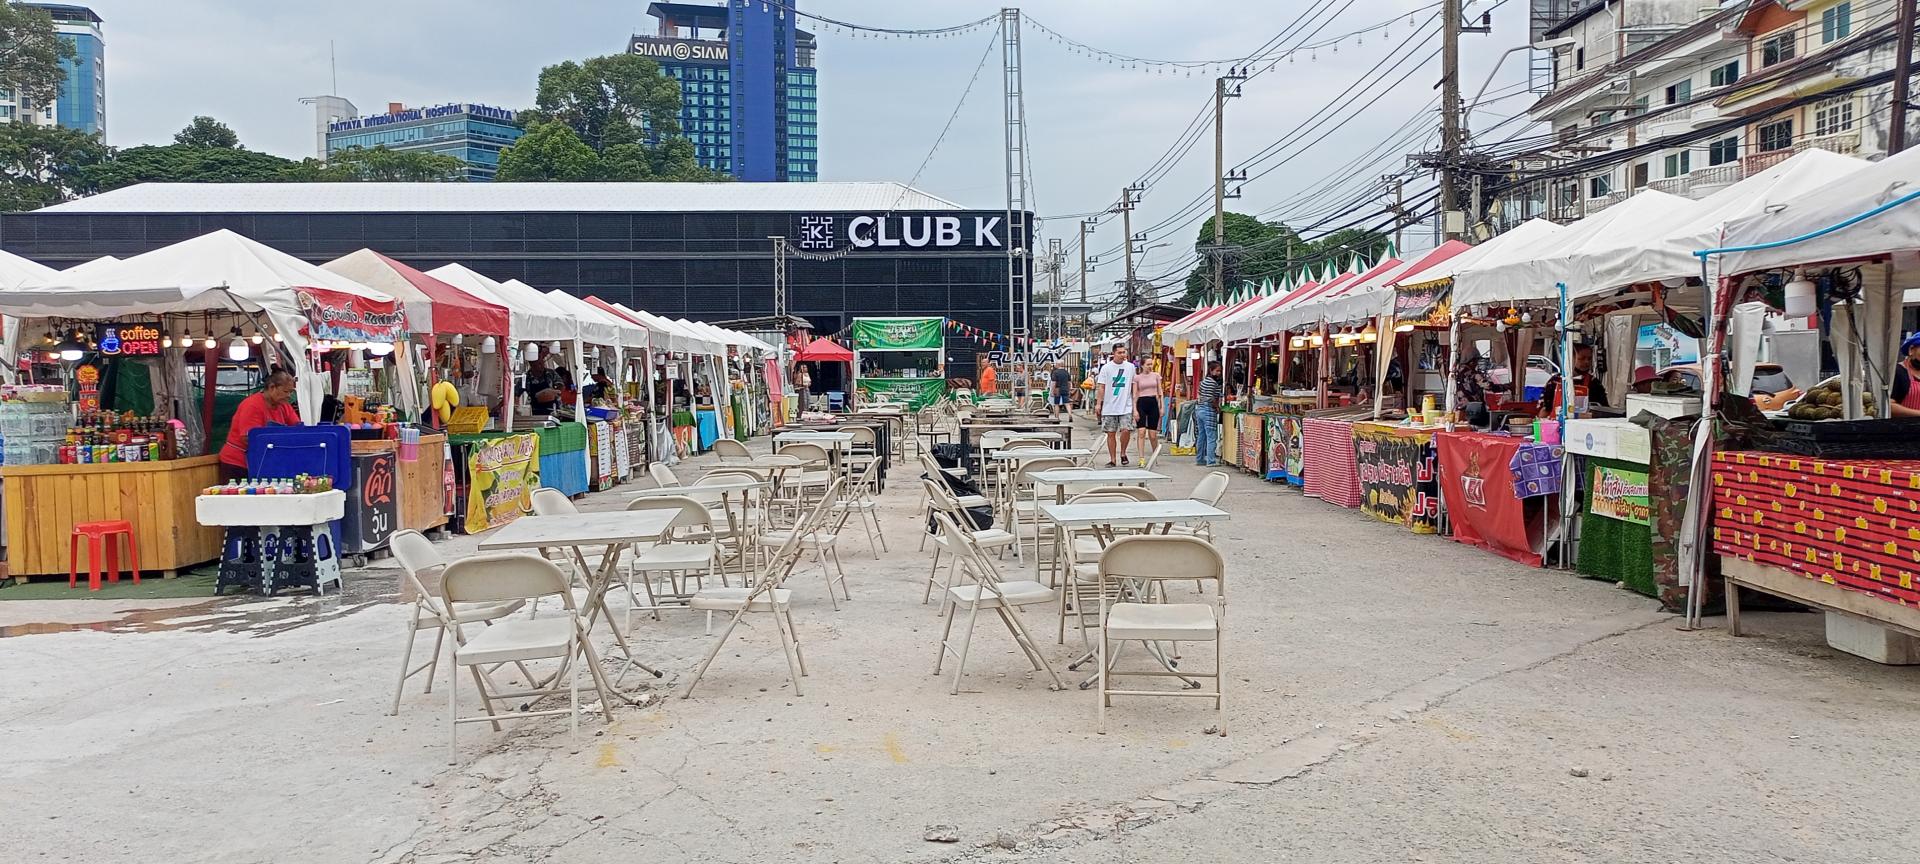 Club K opens soon, 2nd Road Pattaya